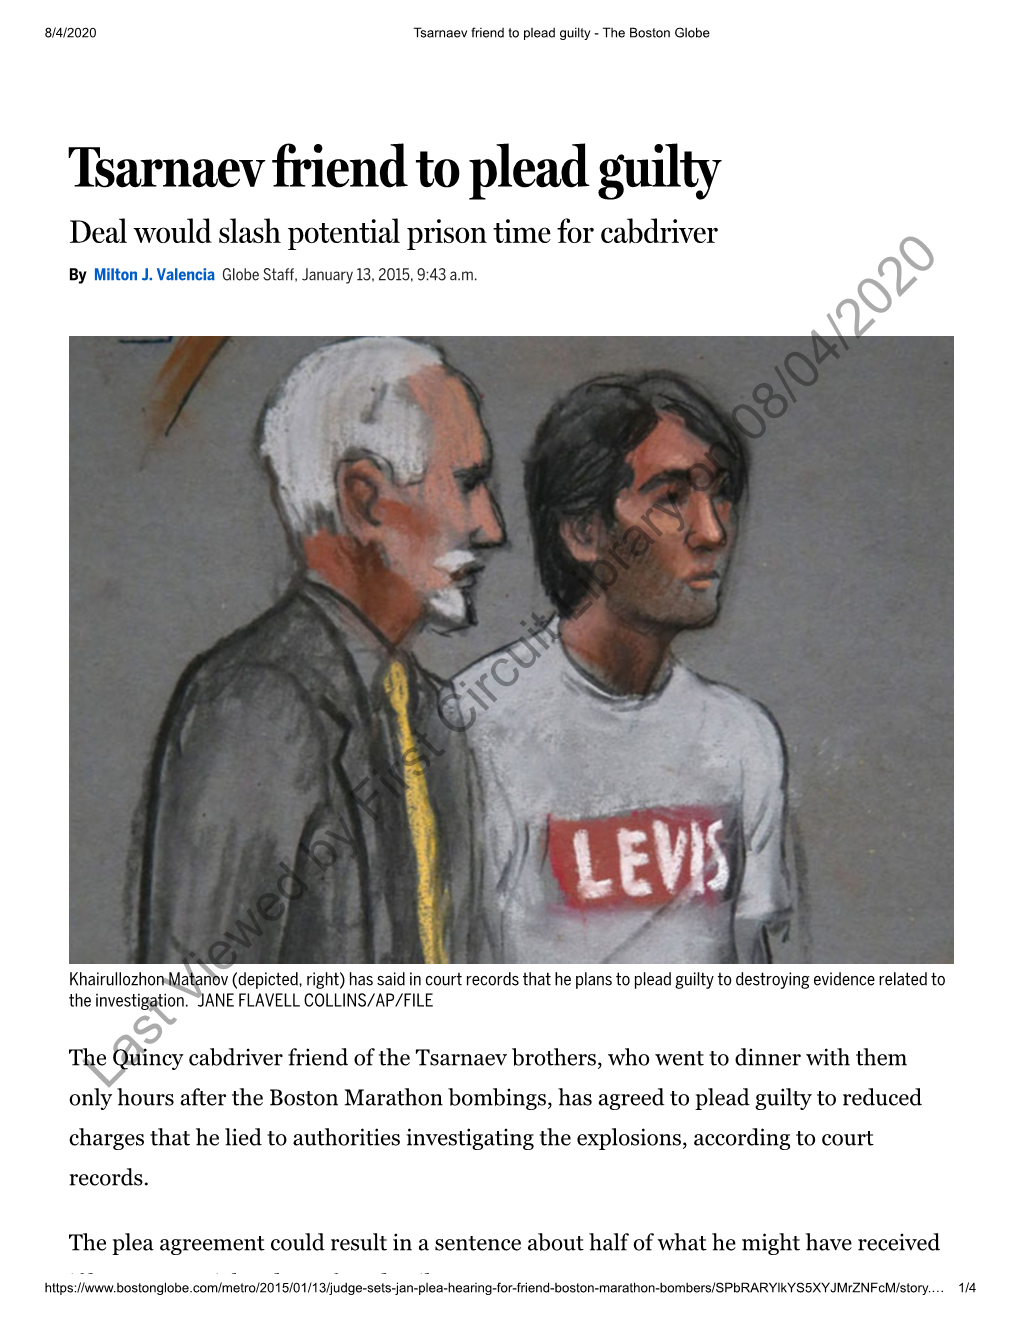 Tsarnaev Friend to Plead Guilty - the Boston Globe